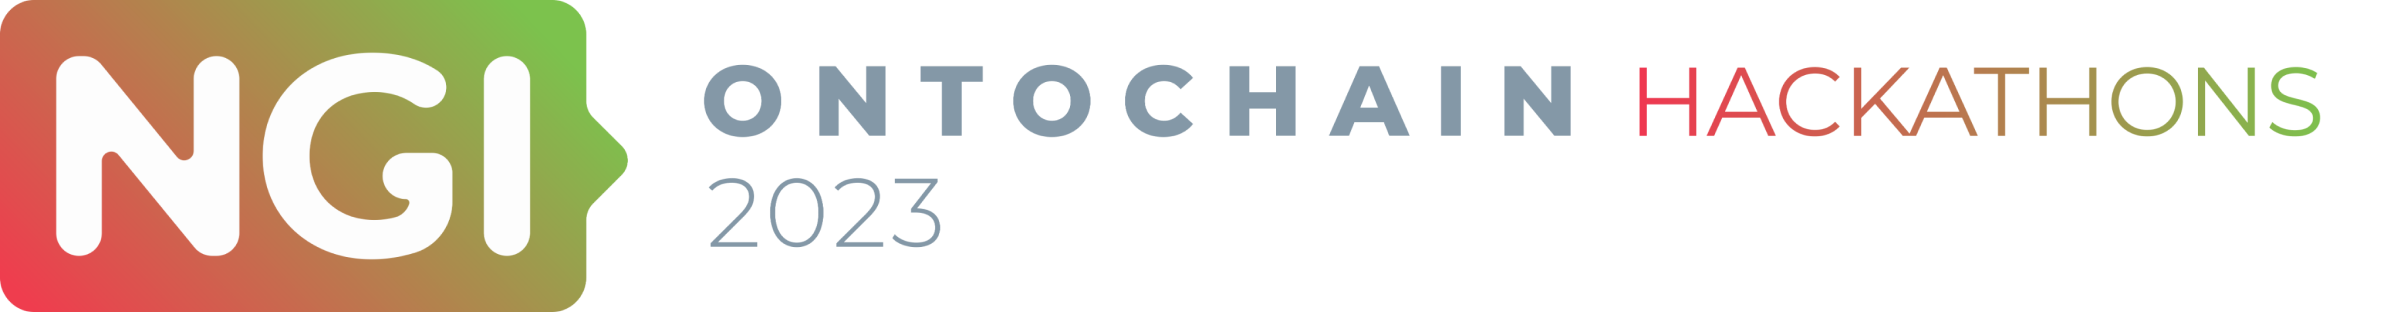 Ontochain Hackathons 2023 Logo